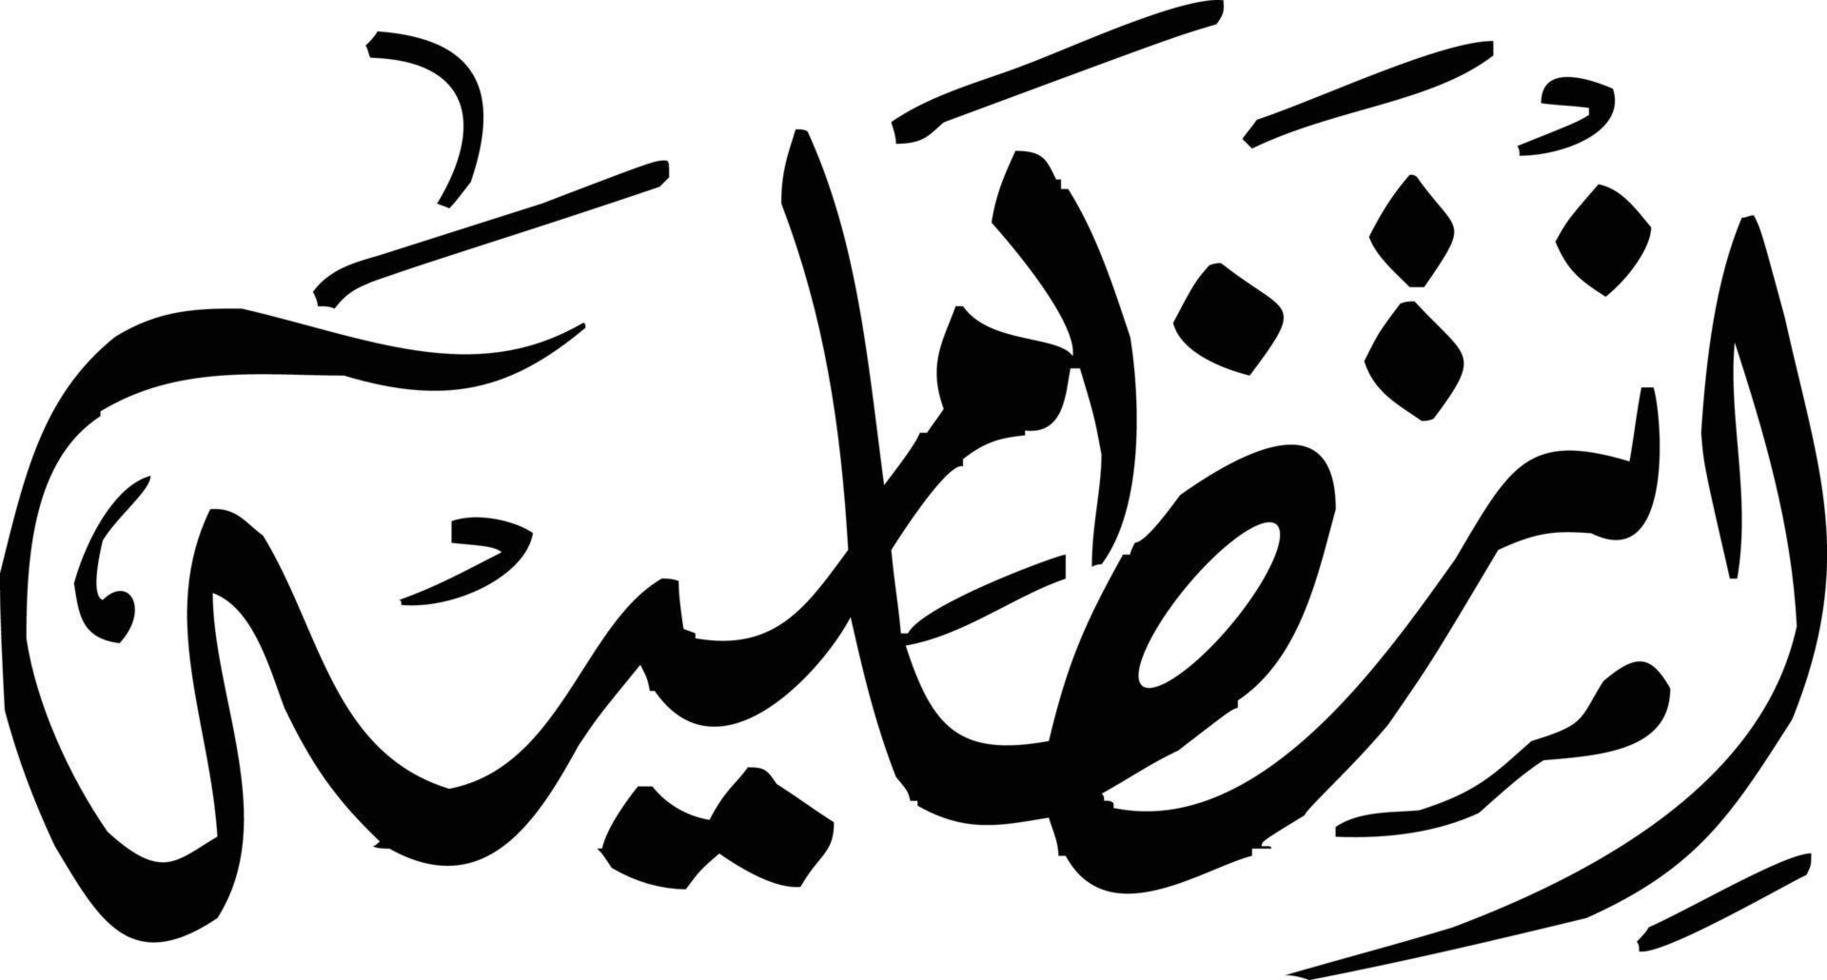 intazamiya calligraphie arabe islamique vecteur gratuit